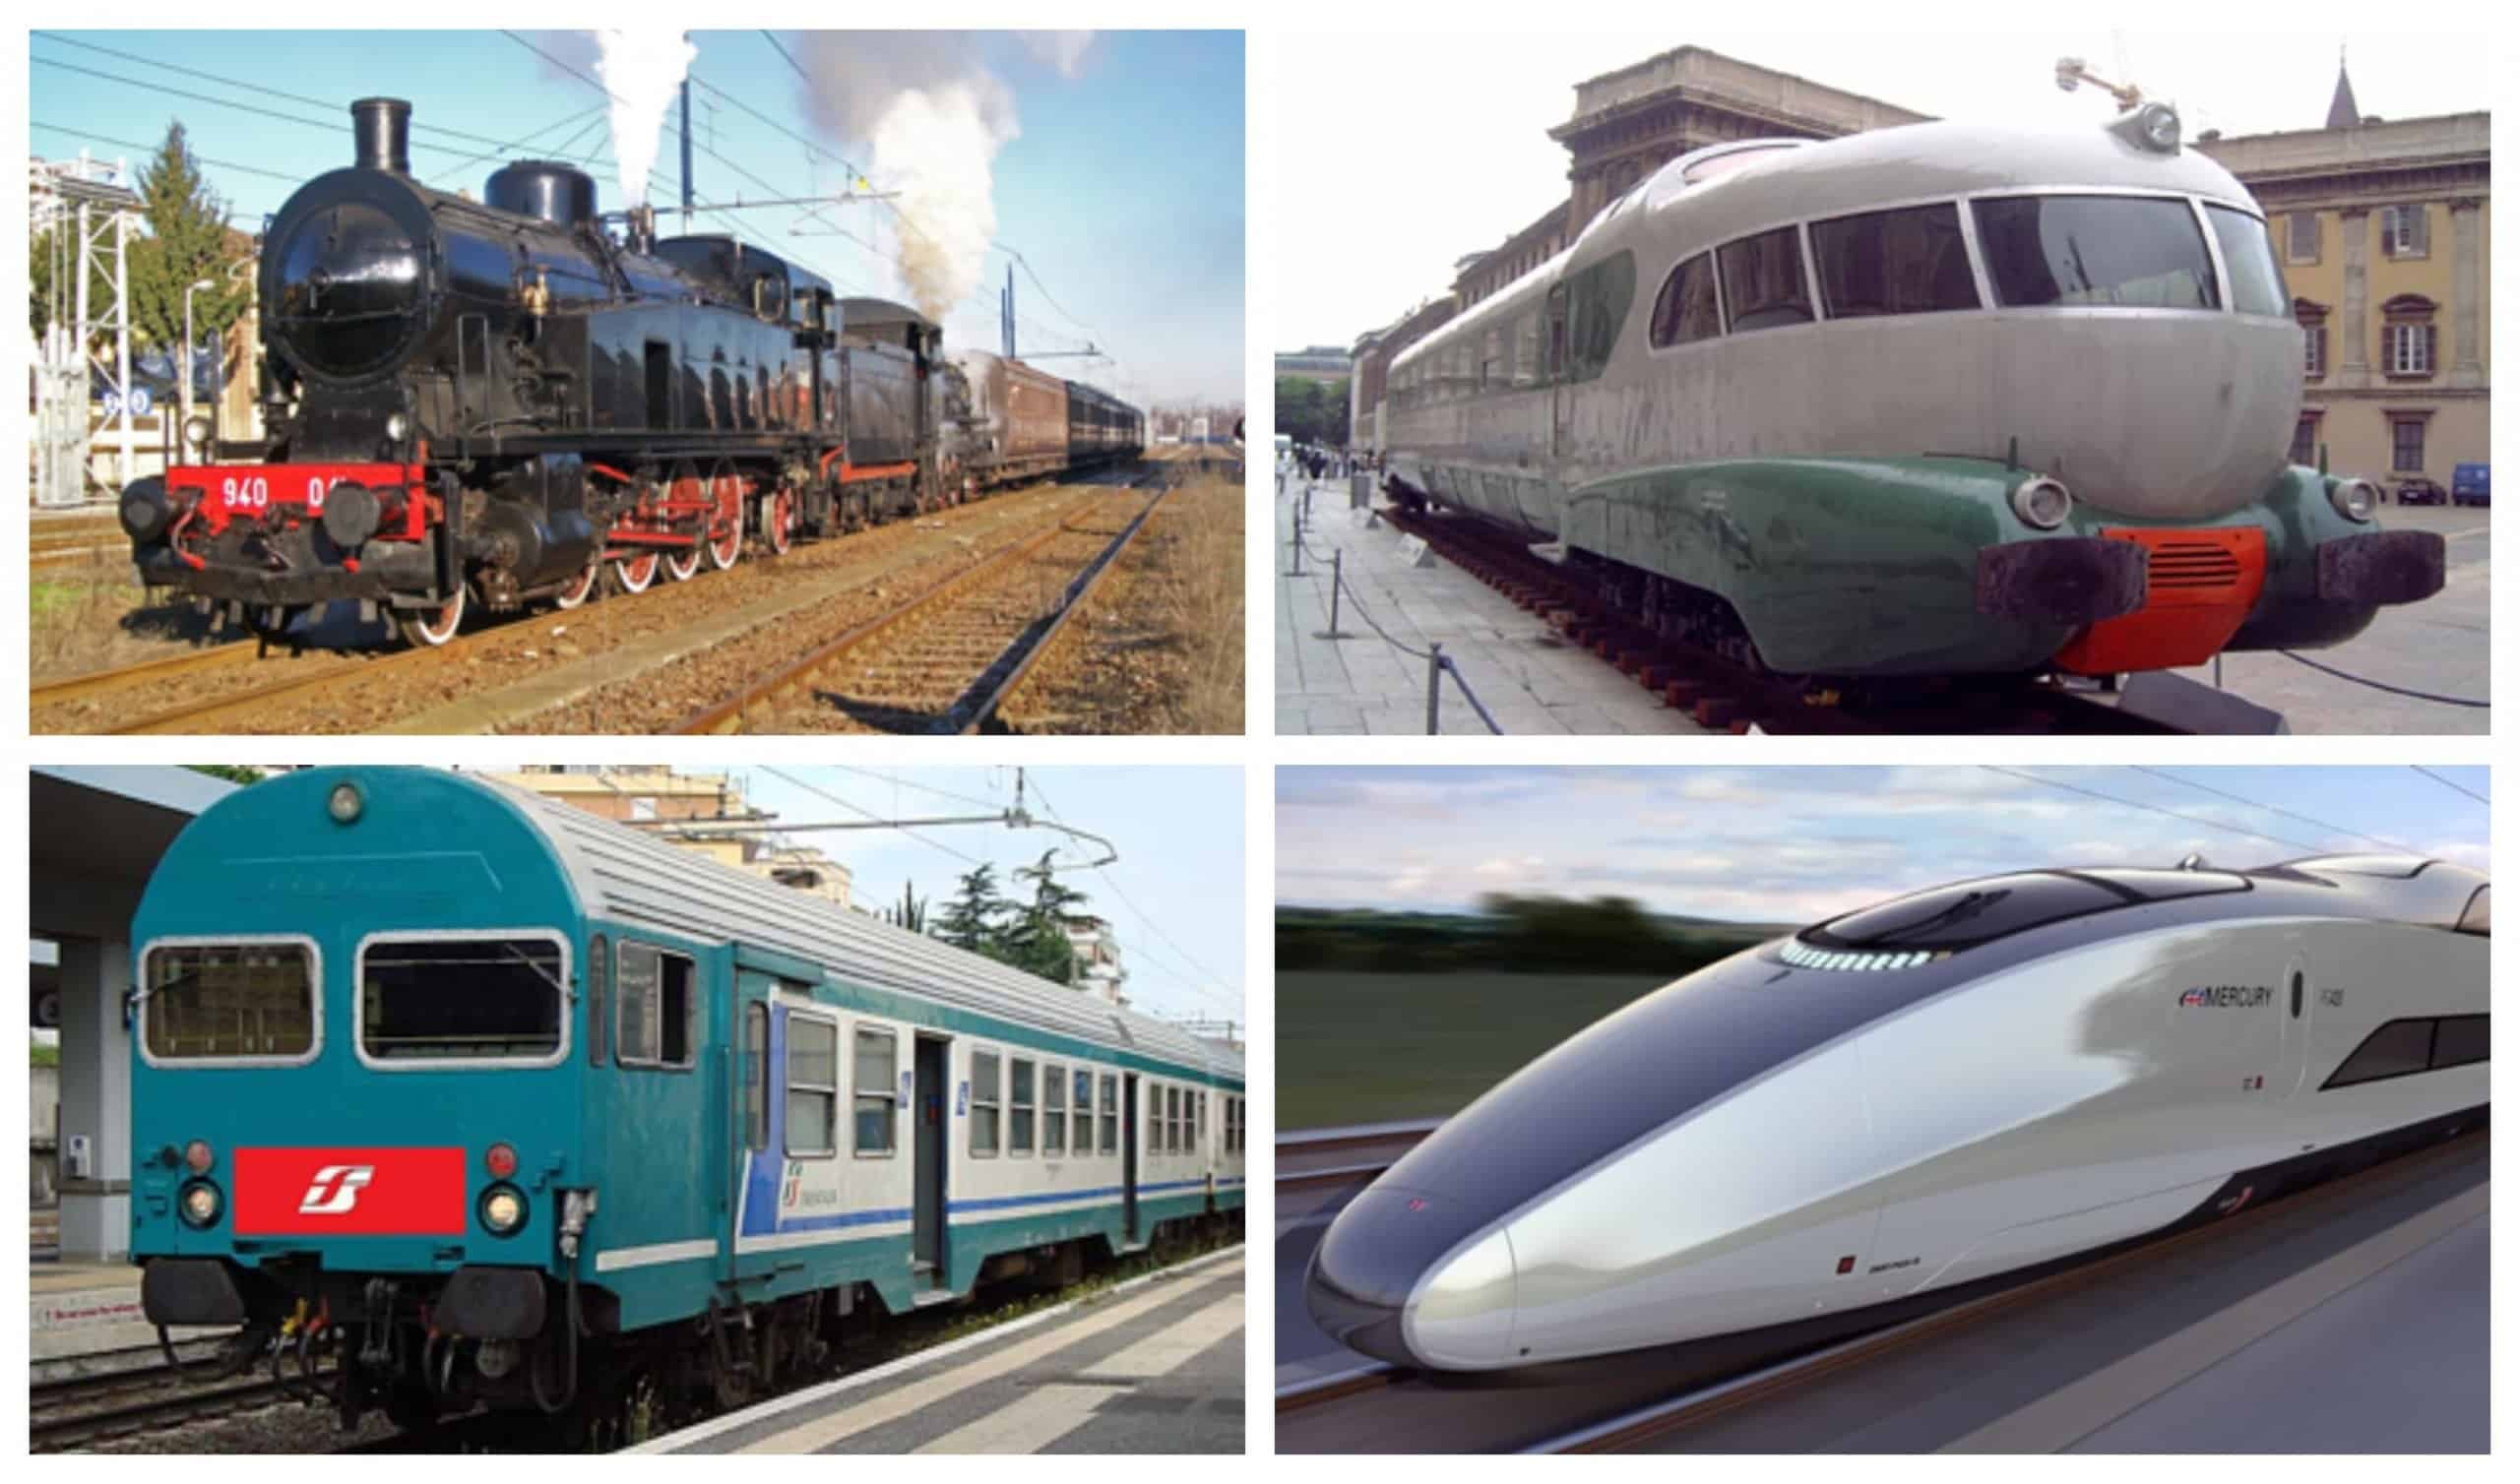 aerodynamic design of trains